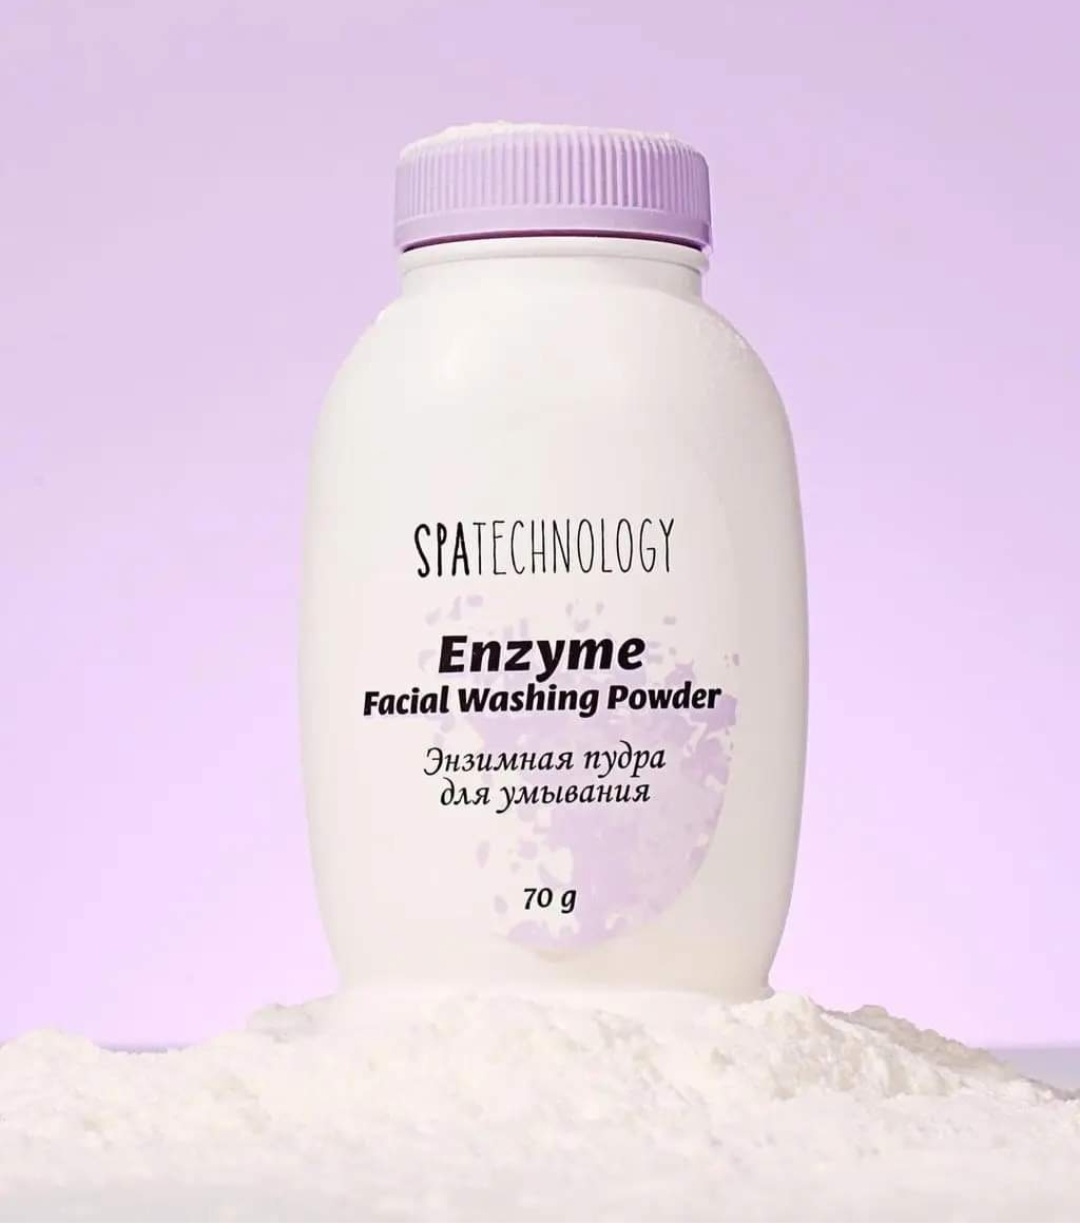 Facial Enzyme Washing Powder,70g  SKU: 10261